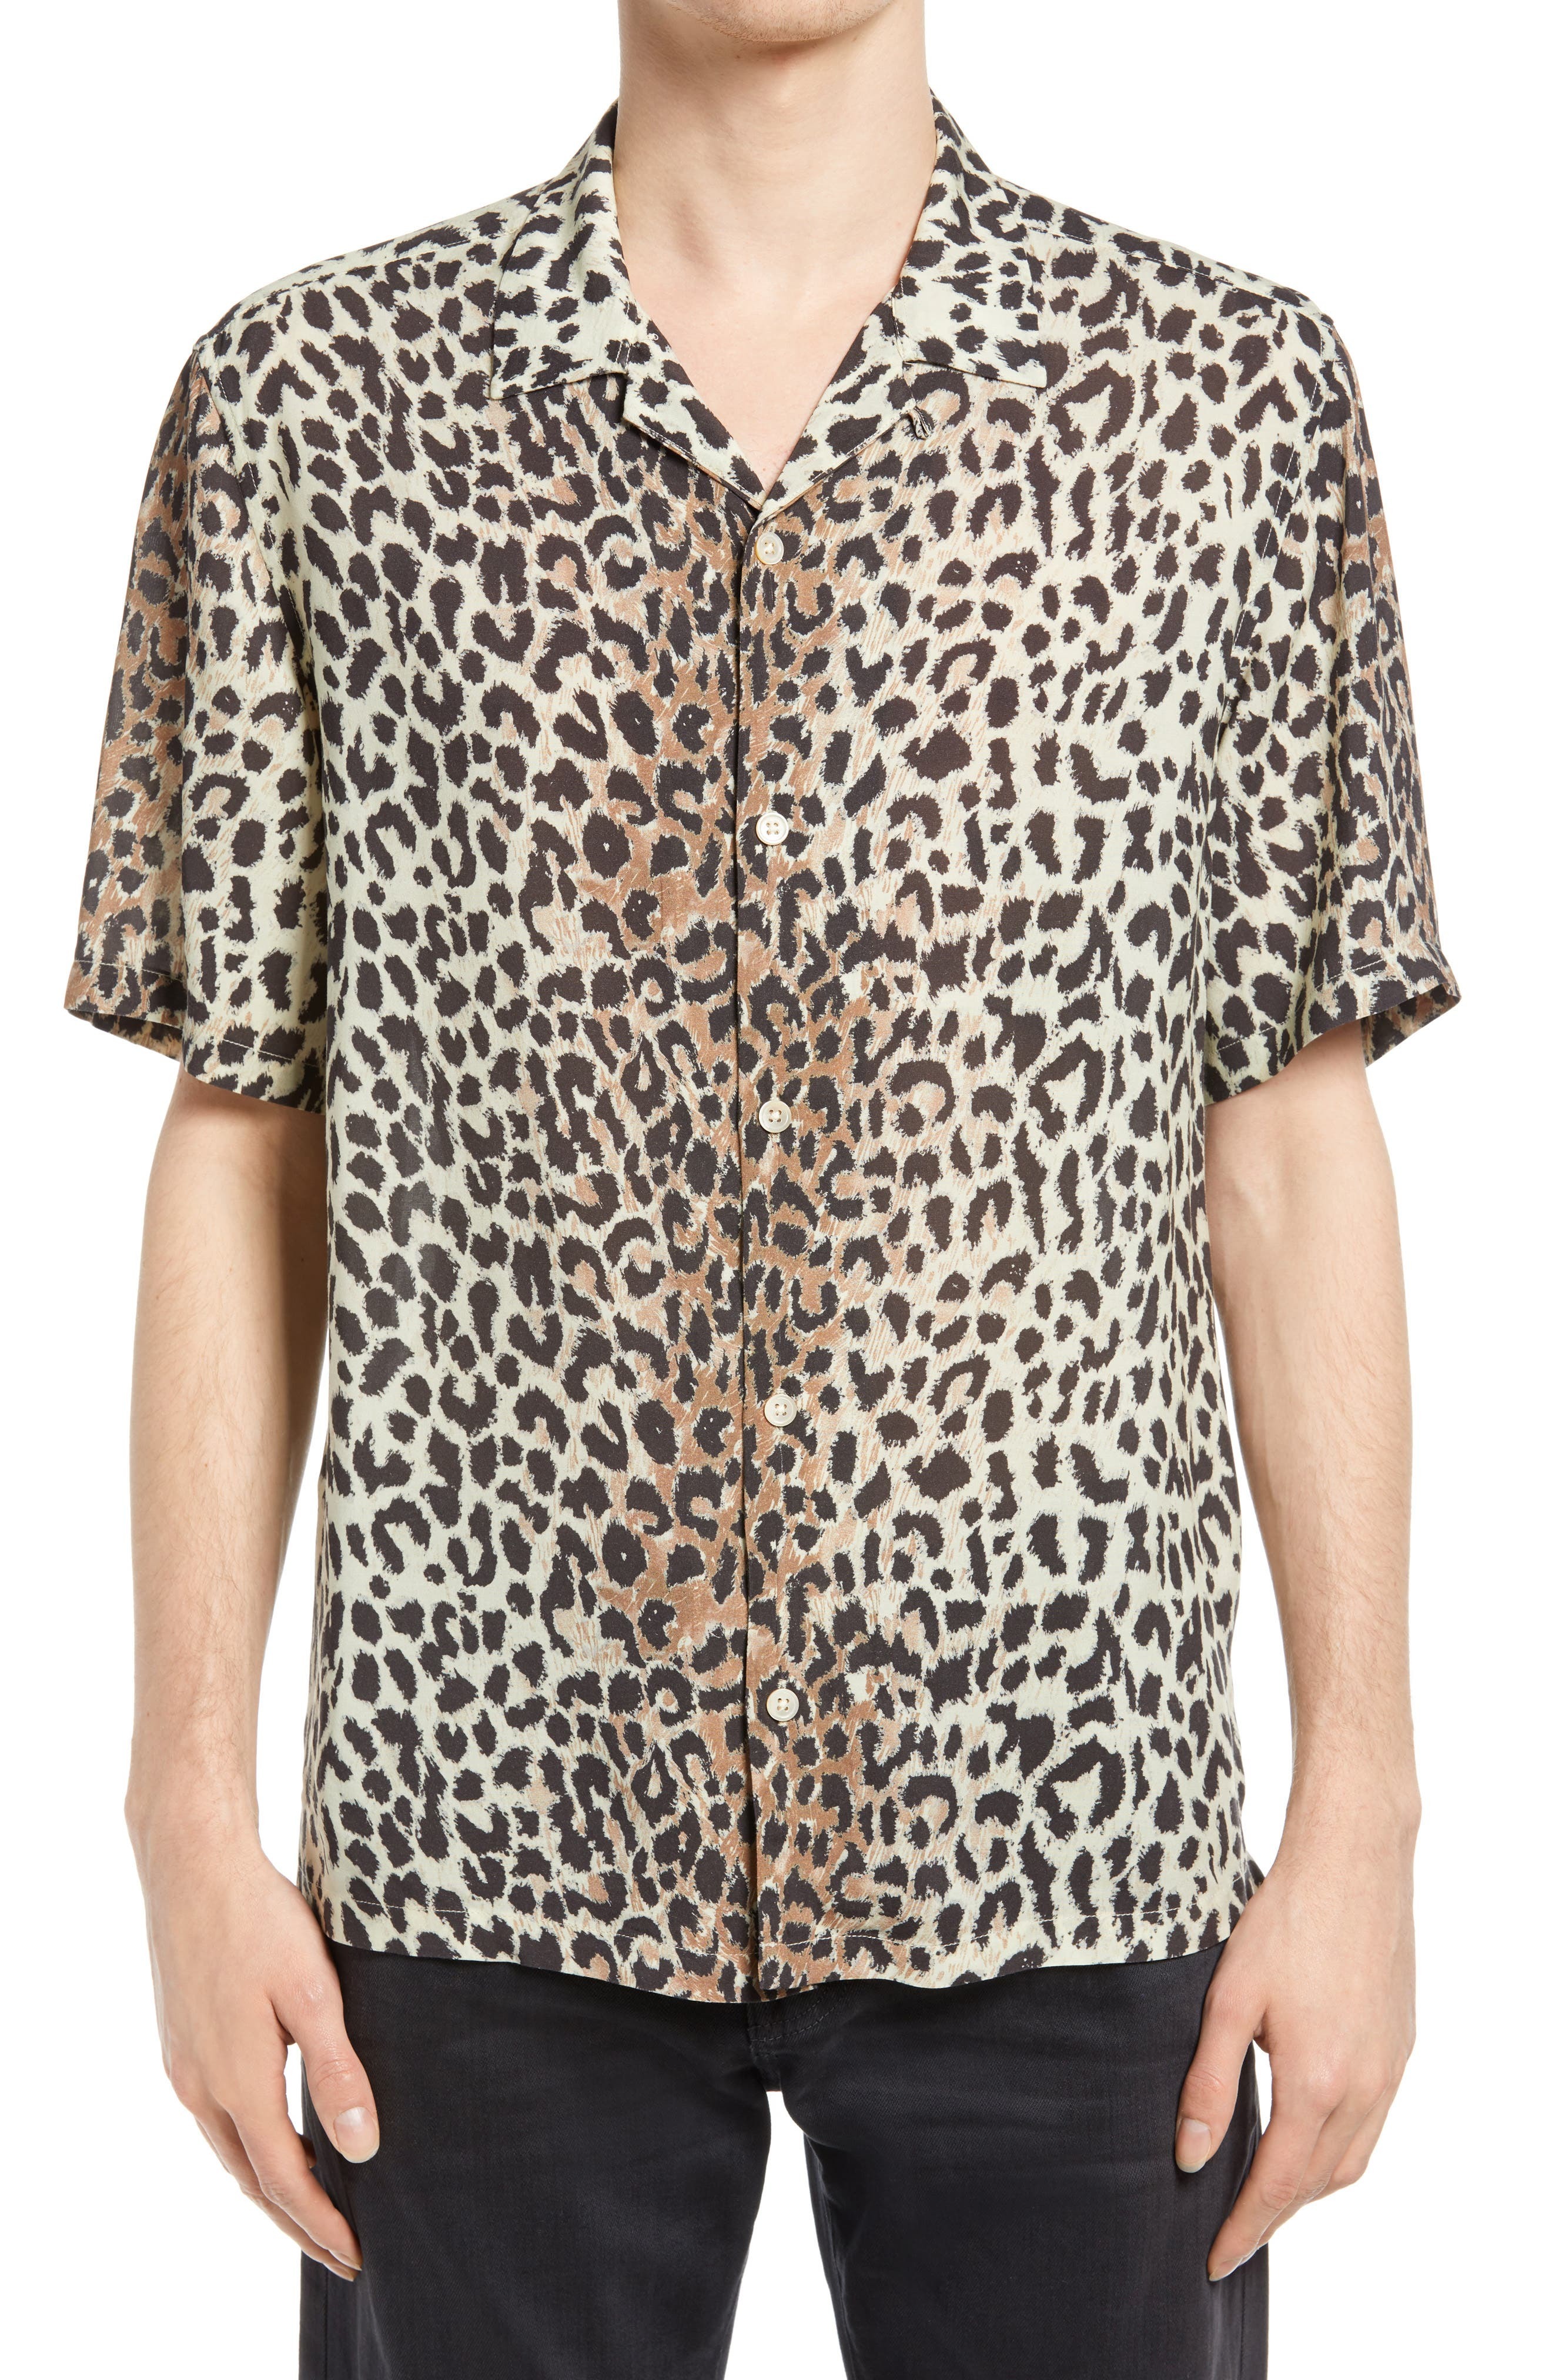 AllSaints Reserve Slim Fit Animal Print Button Up Shirt, $83 ...